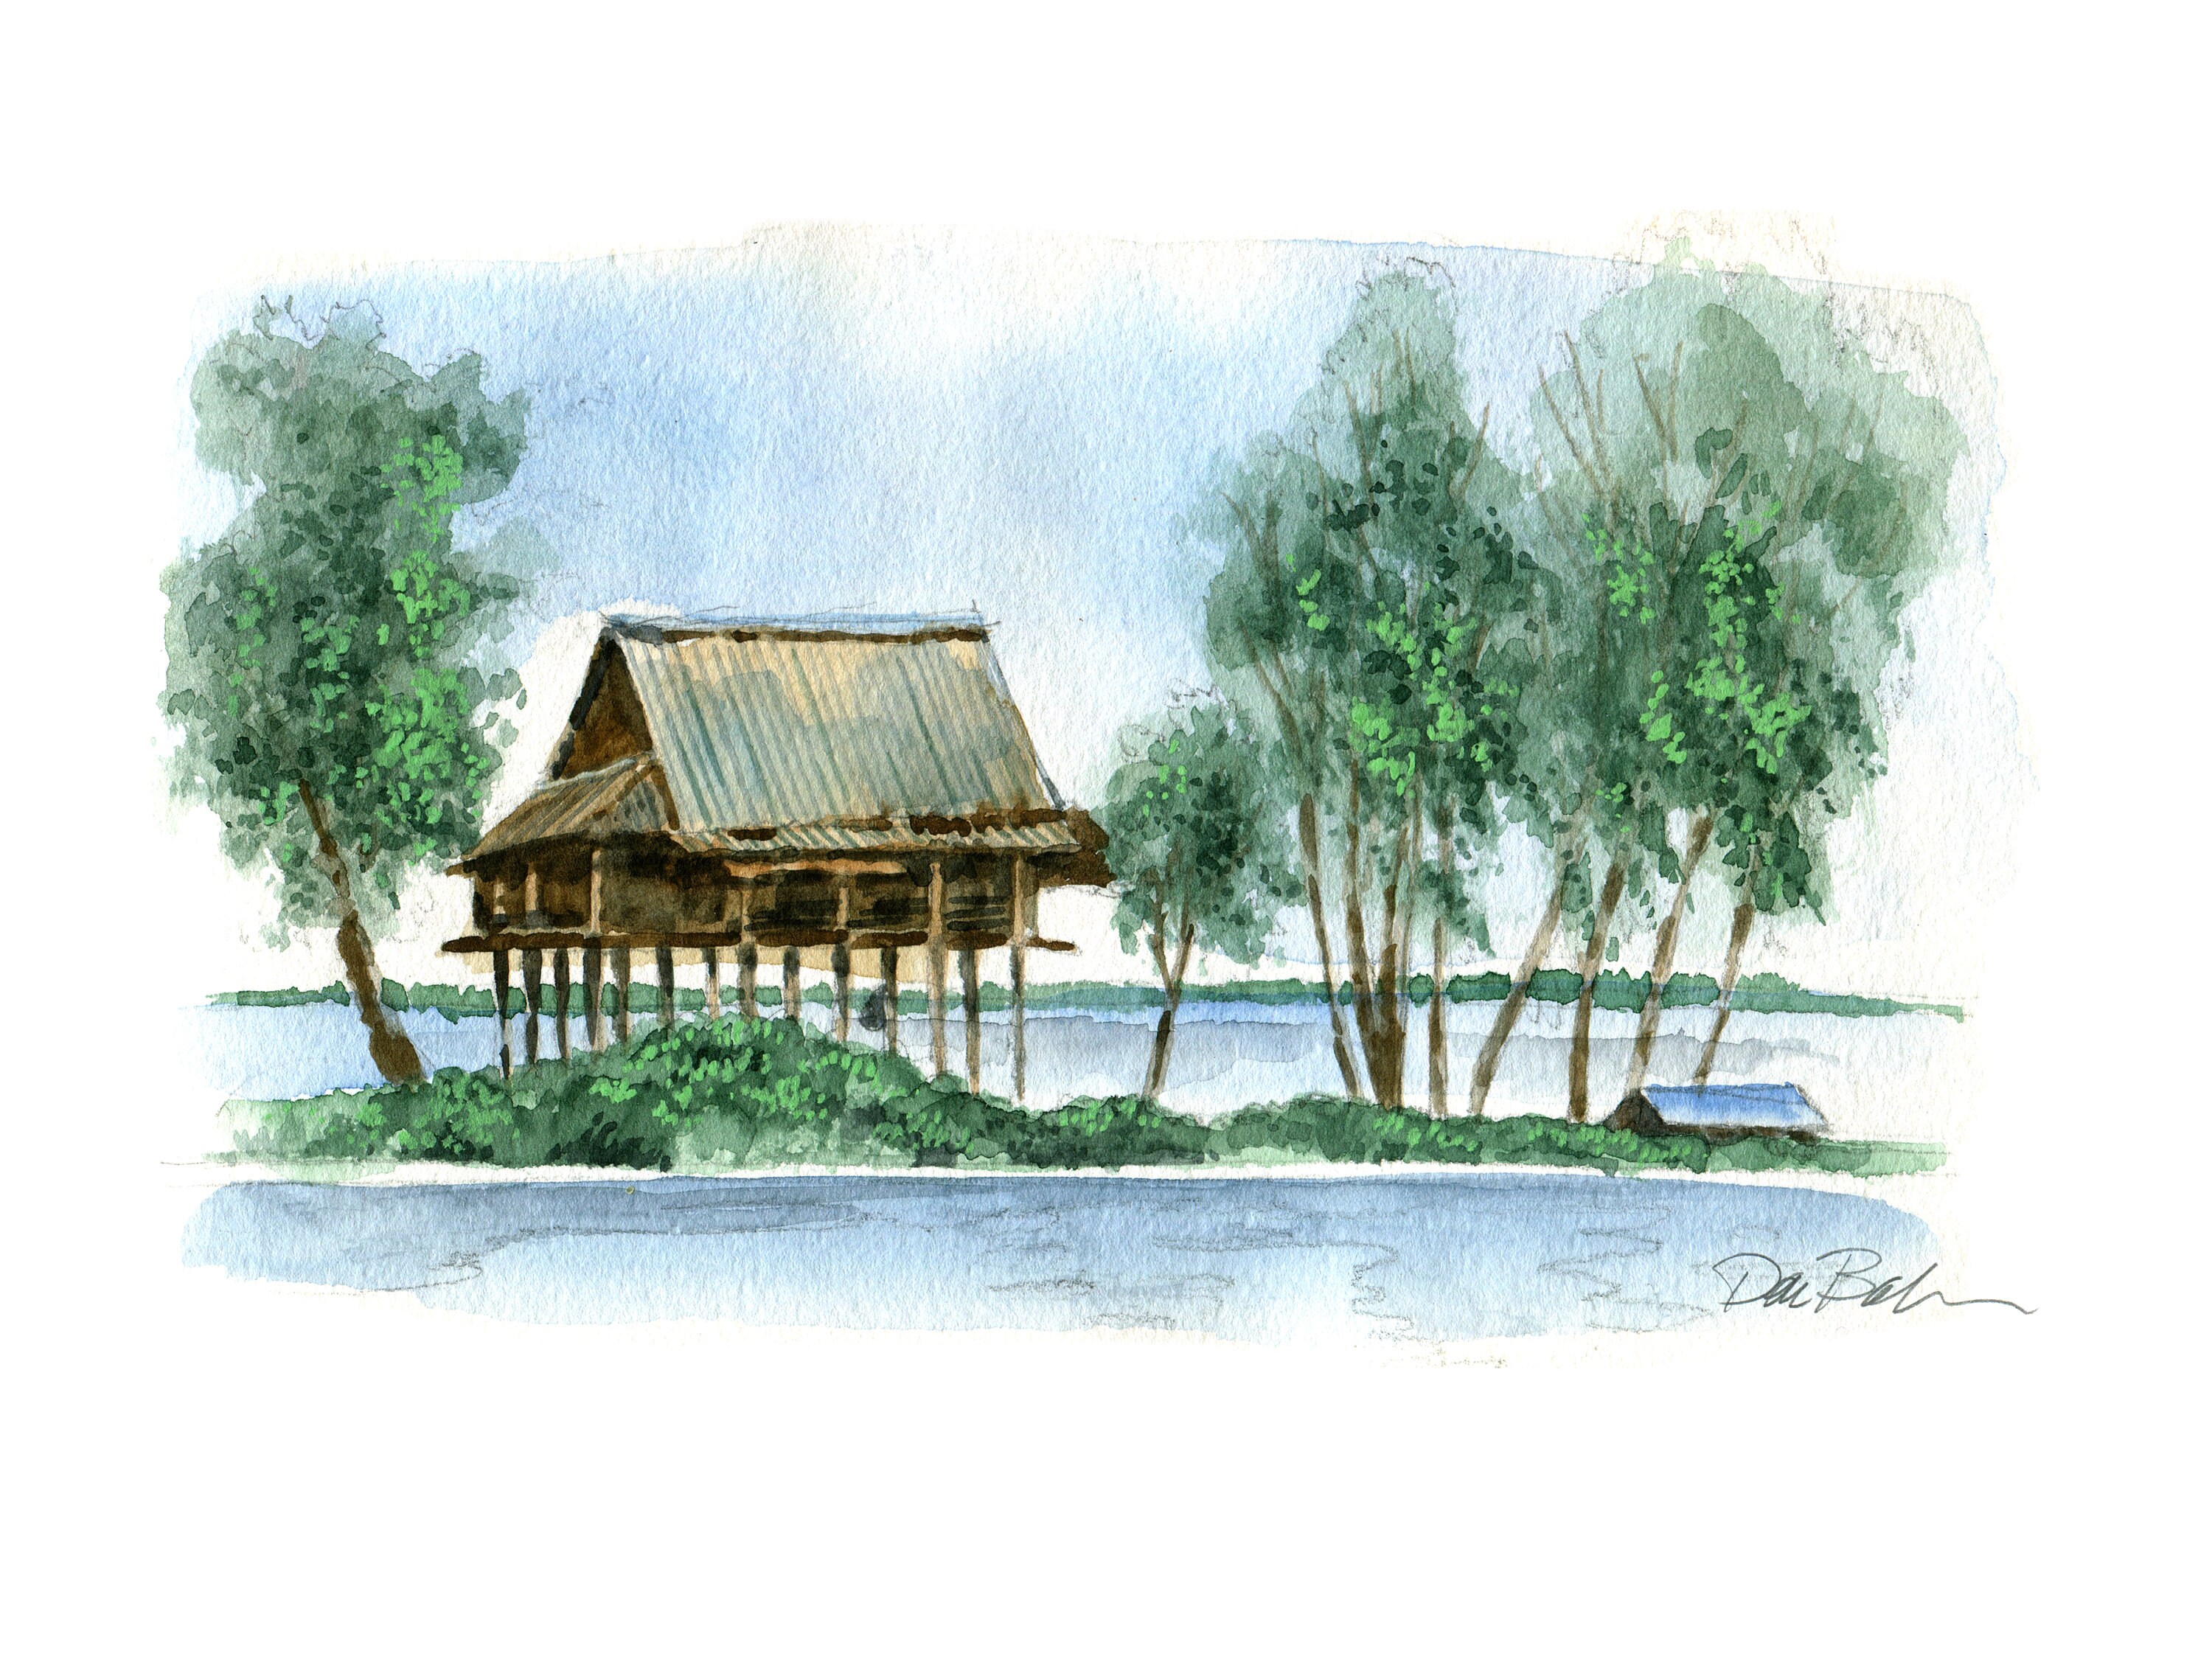 Stilt house (Indonesia) 2 | Human - Culture, Archaeology